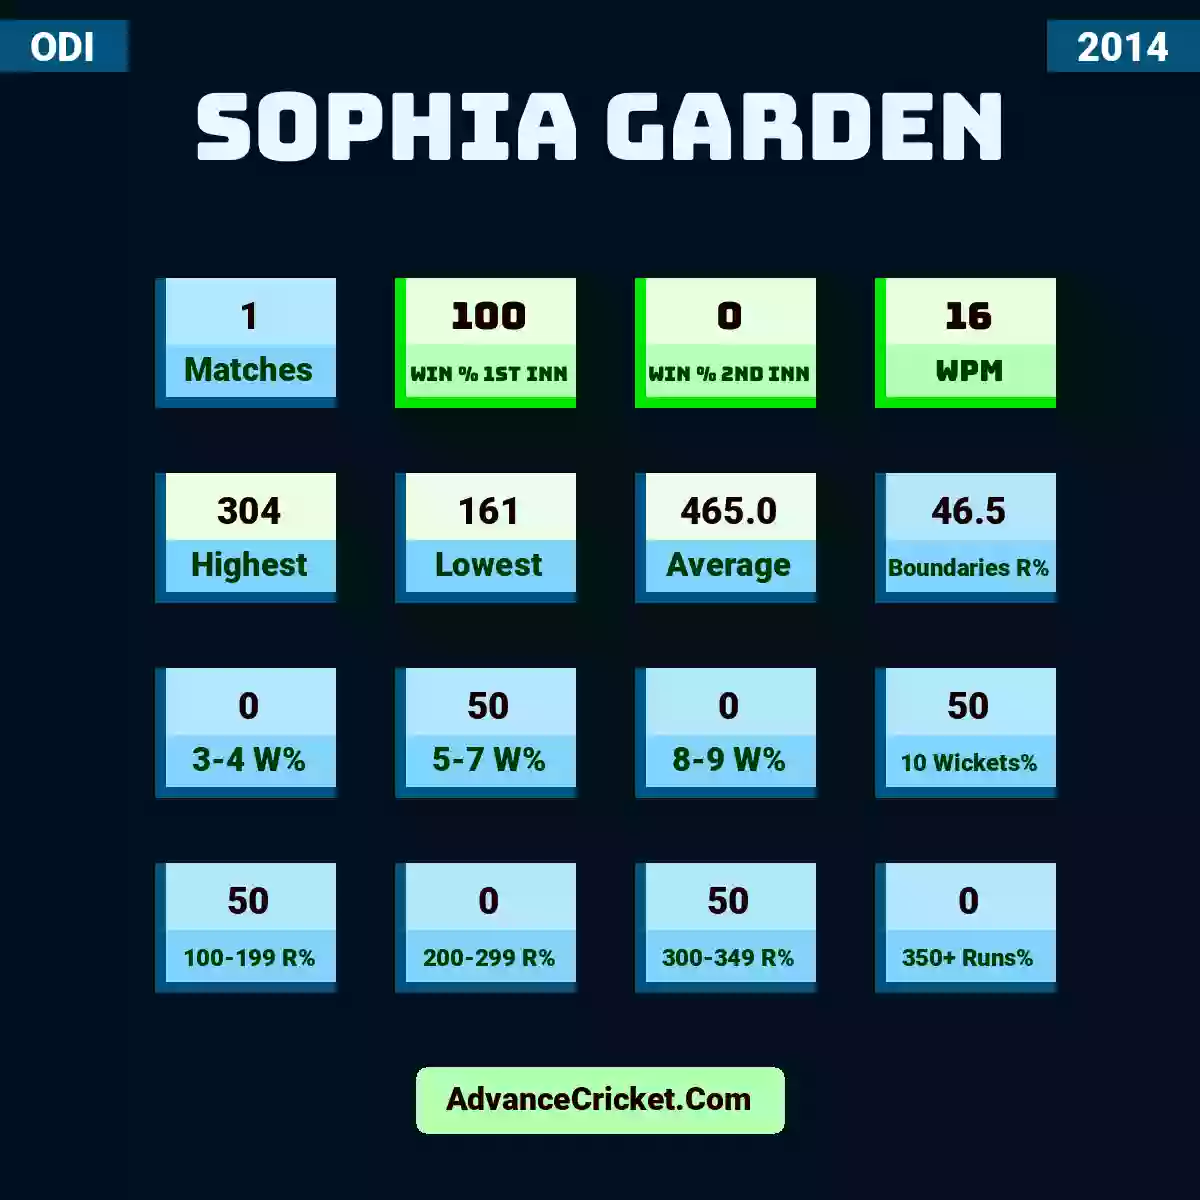 Image showing Sophia Garden with Matches: 1, Win % 1st Inn: 100, Win % 2nd Inn: 0, WPM: 16, Highest: 304, Lowest: 161, Average: 465.0, Boundaries R%: 46.5, 3-4 W%: 0, 5-7 W%: 50, 8-9 W%: 0, 10 Wickets%: 50, 100-199 R%: 50, 200-299 R%: 0, 300-349 R%: 50, 350+ Runs%: 0.